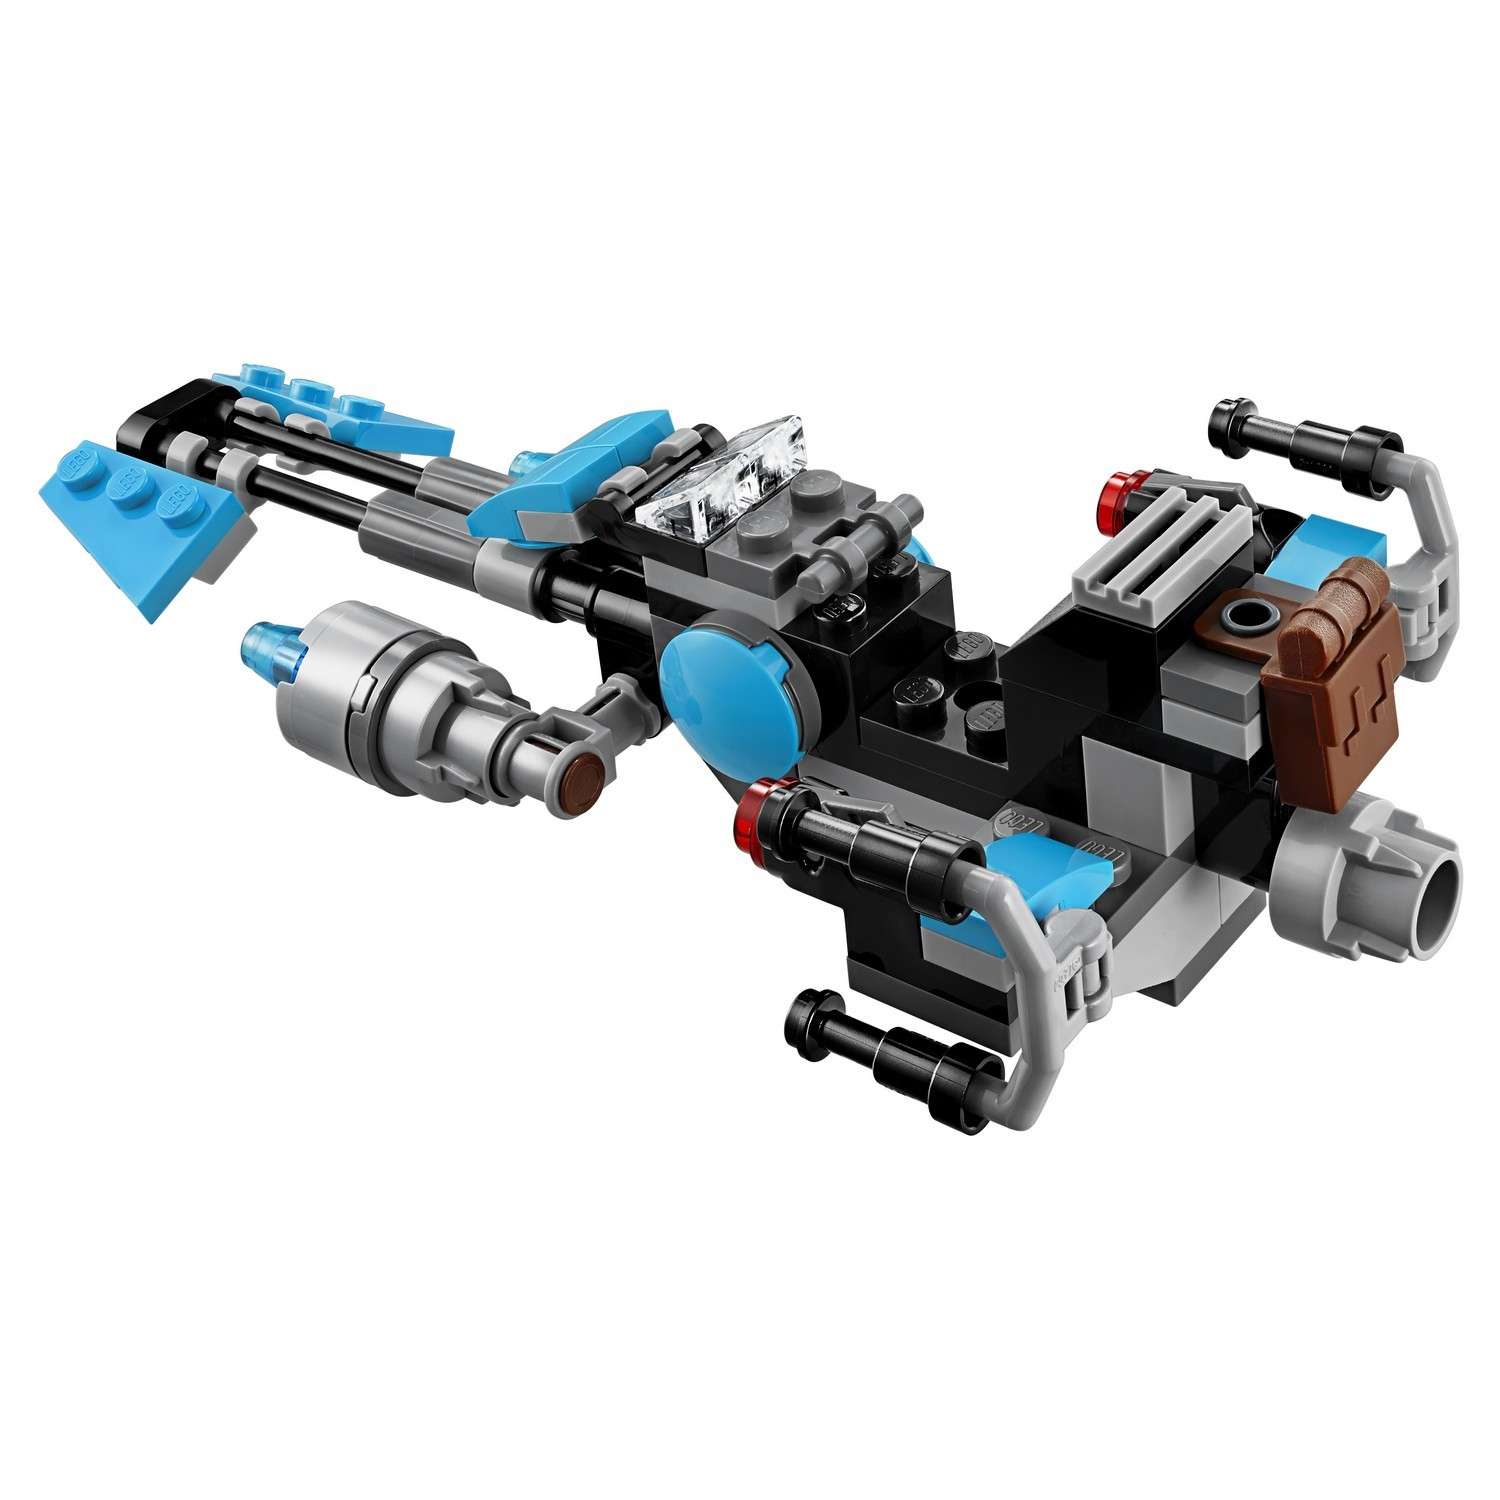 Конструктор LEGO Star Wars TM Спидер охотников за головами (75167) - фото 8